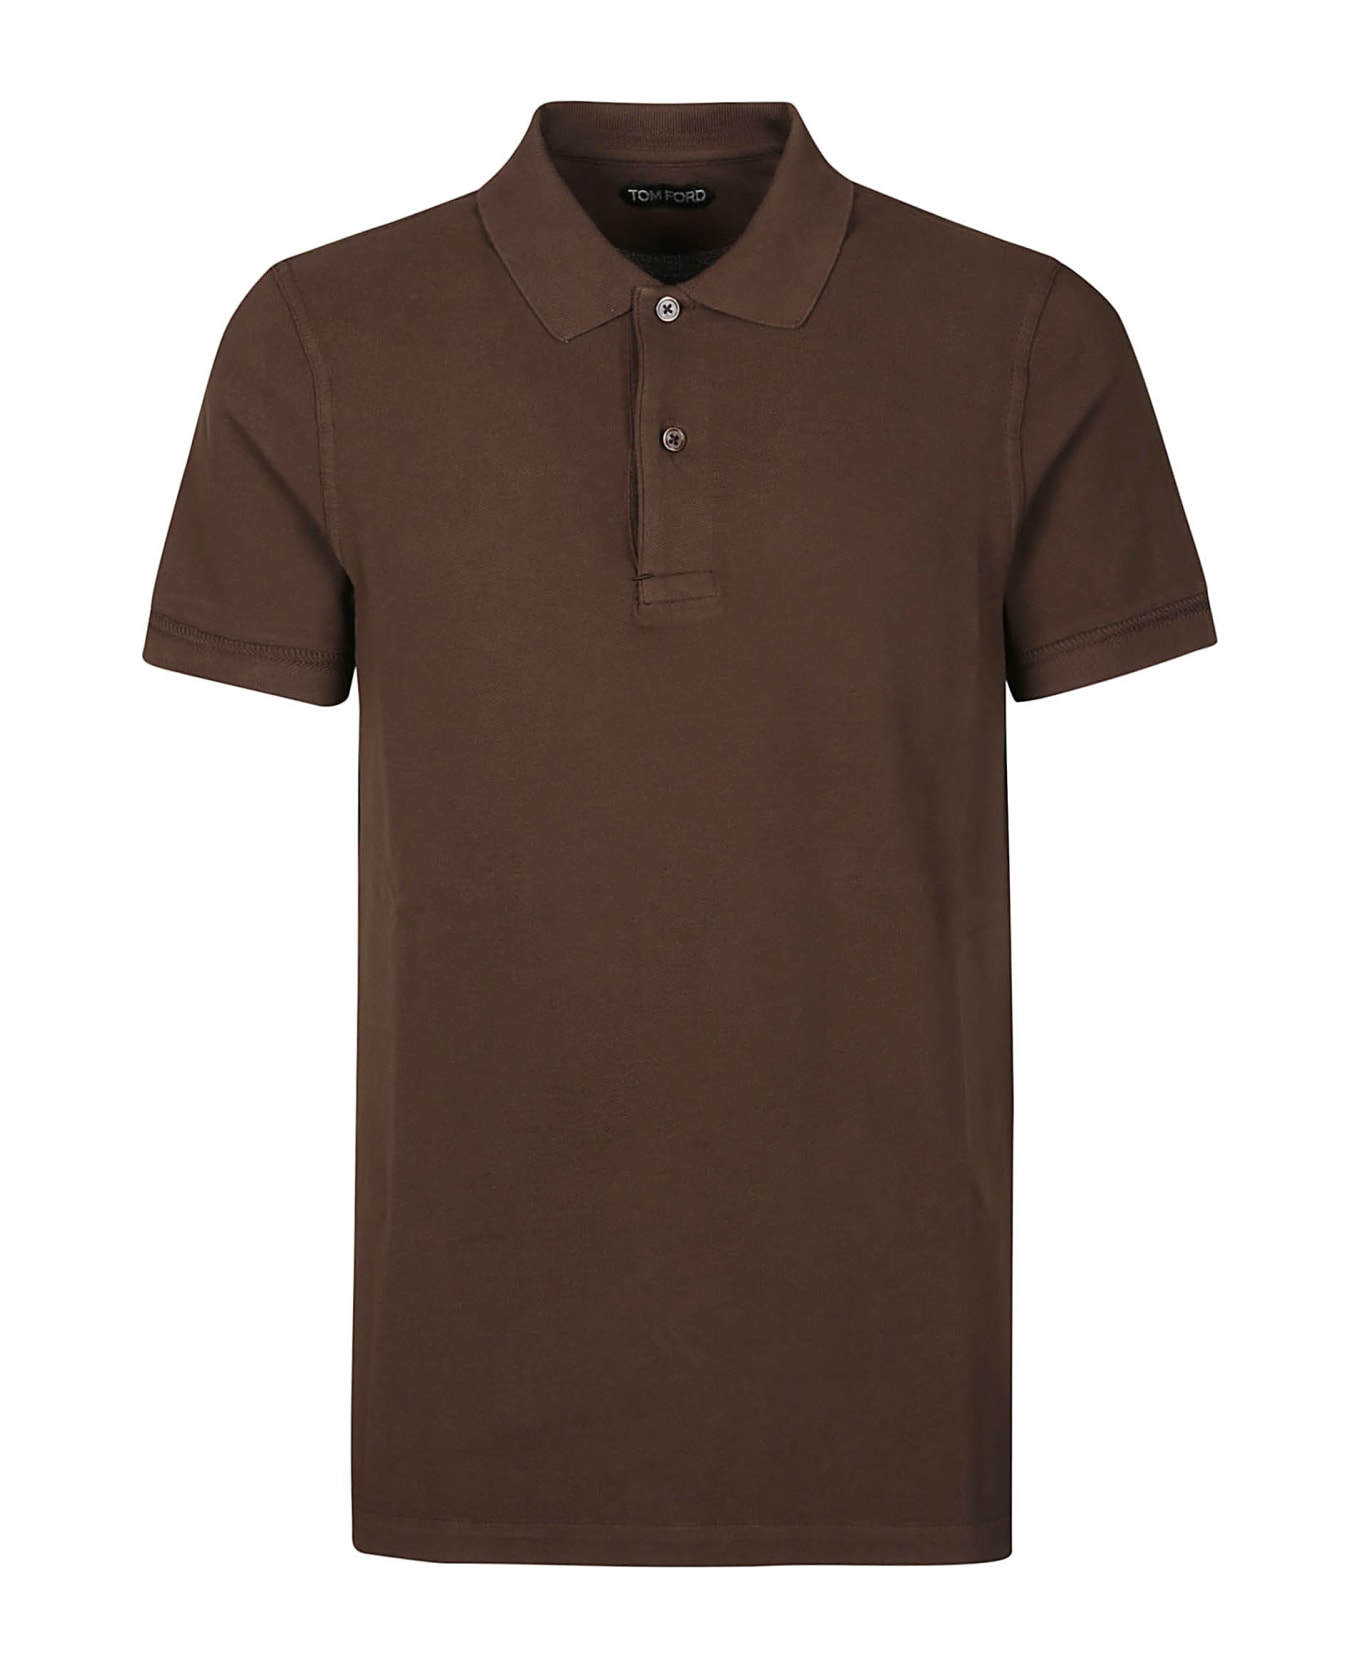 Tom Ford Tennis Piquet Short Sleeve Polo Shirt - Chocolate